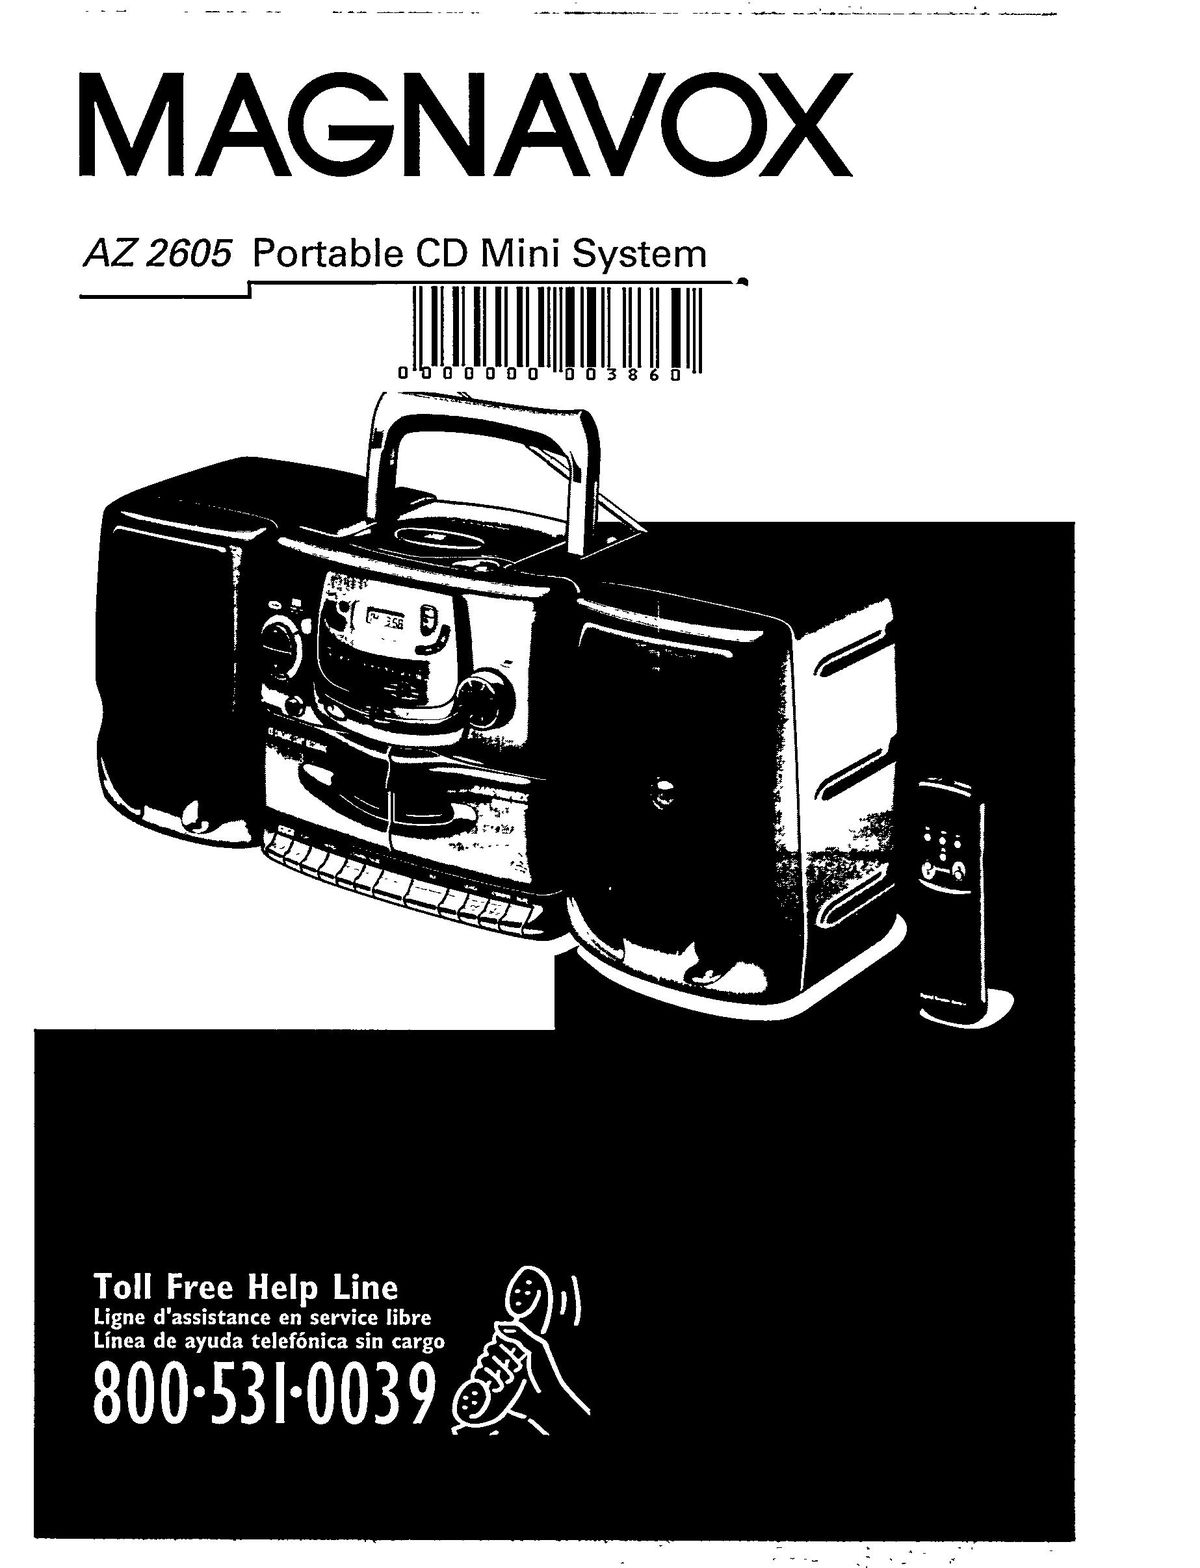 Magnavox AZ 2605 Portable CD Player User Manual